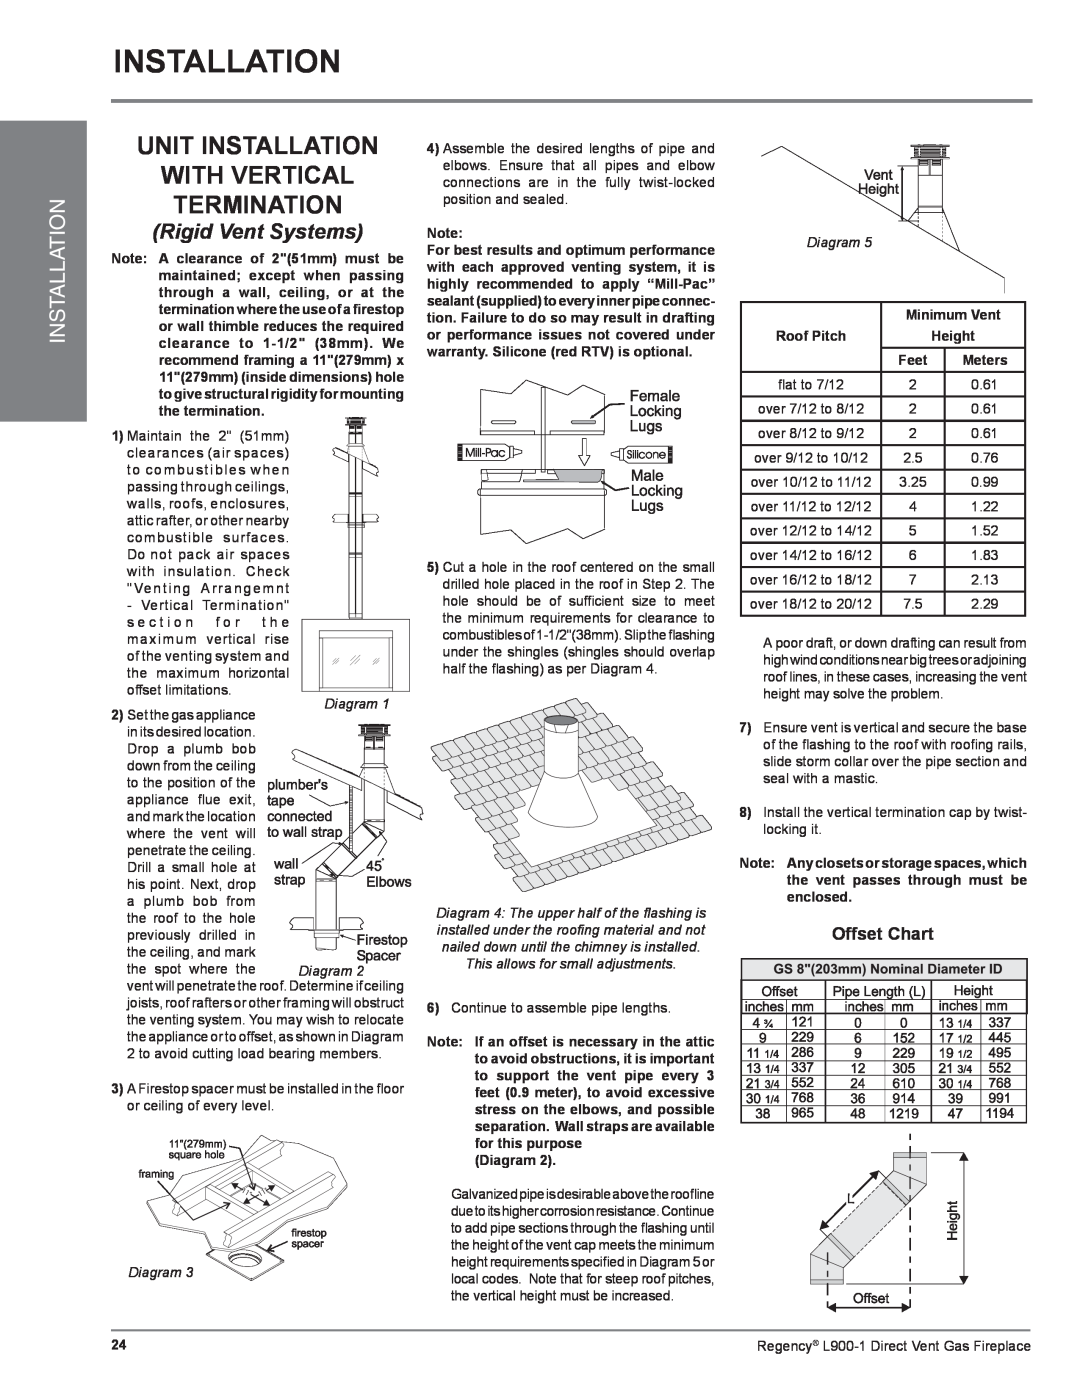 Regency L900-1 Unit Installation With Vertical Termination, Rigid Vent Systems, Diagram, Minimum Vent, Feet 